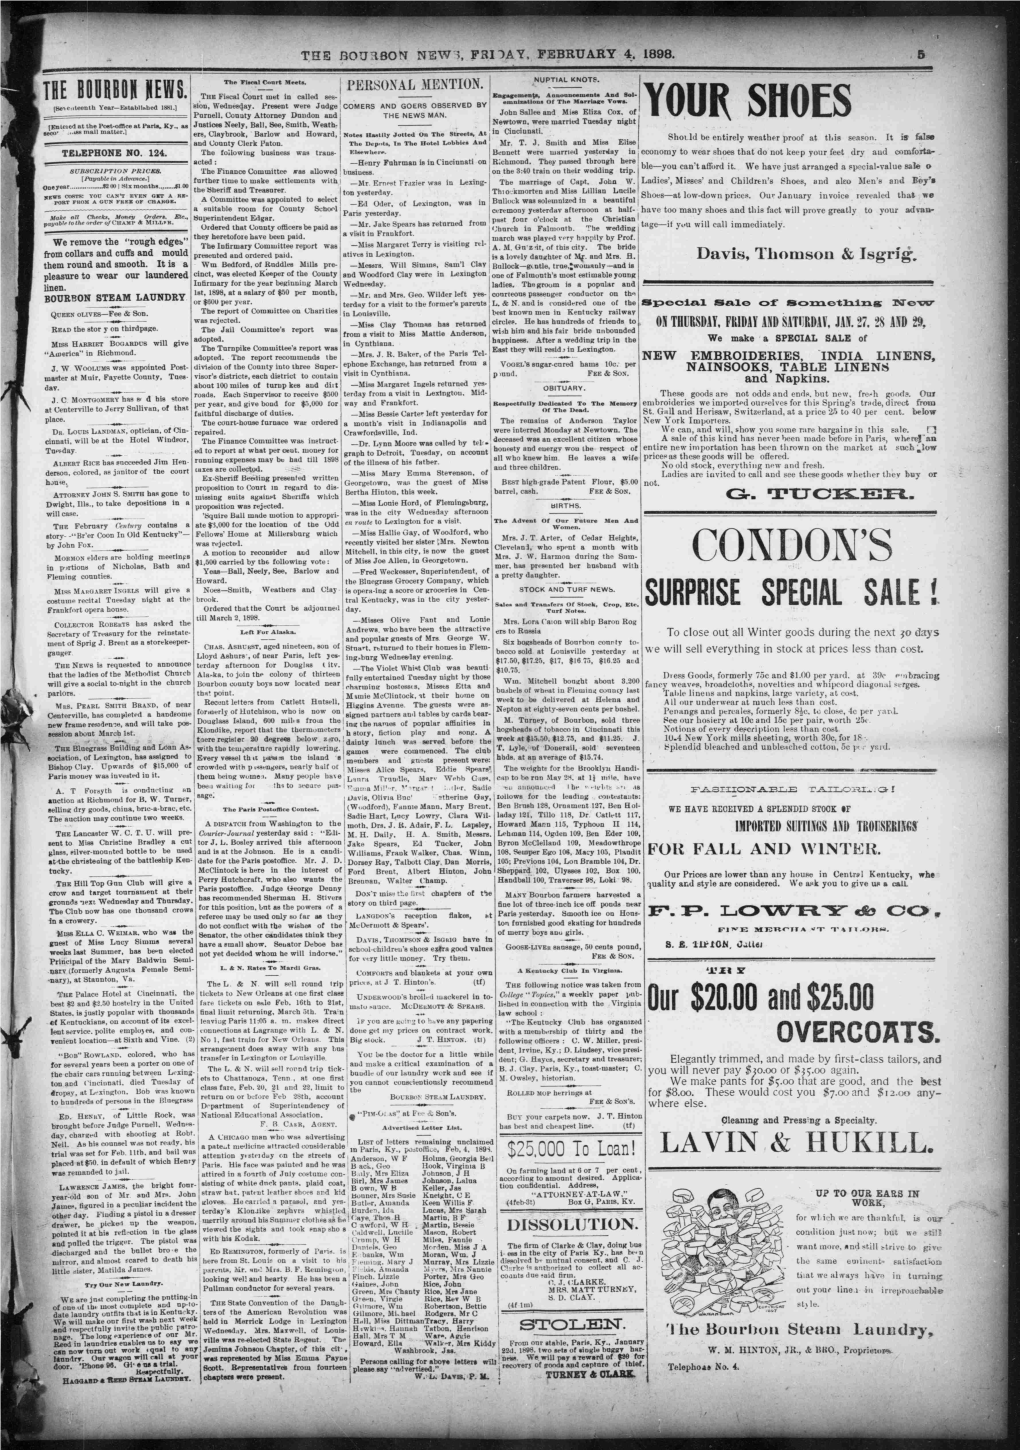 The Bourbon New Fbi Day February 4 1898